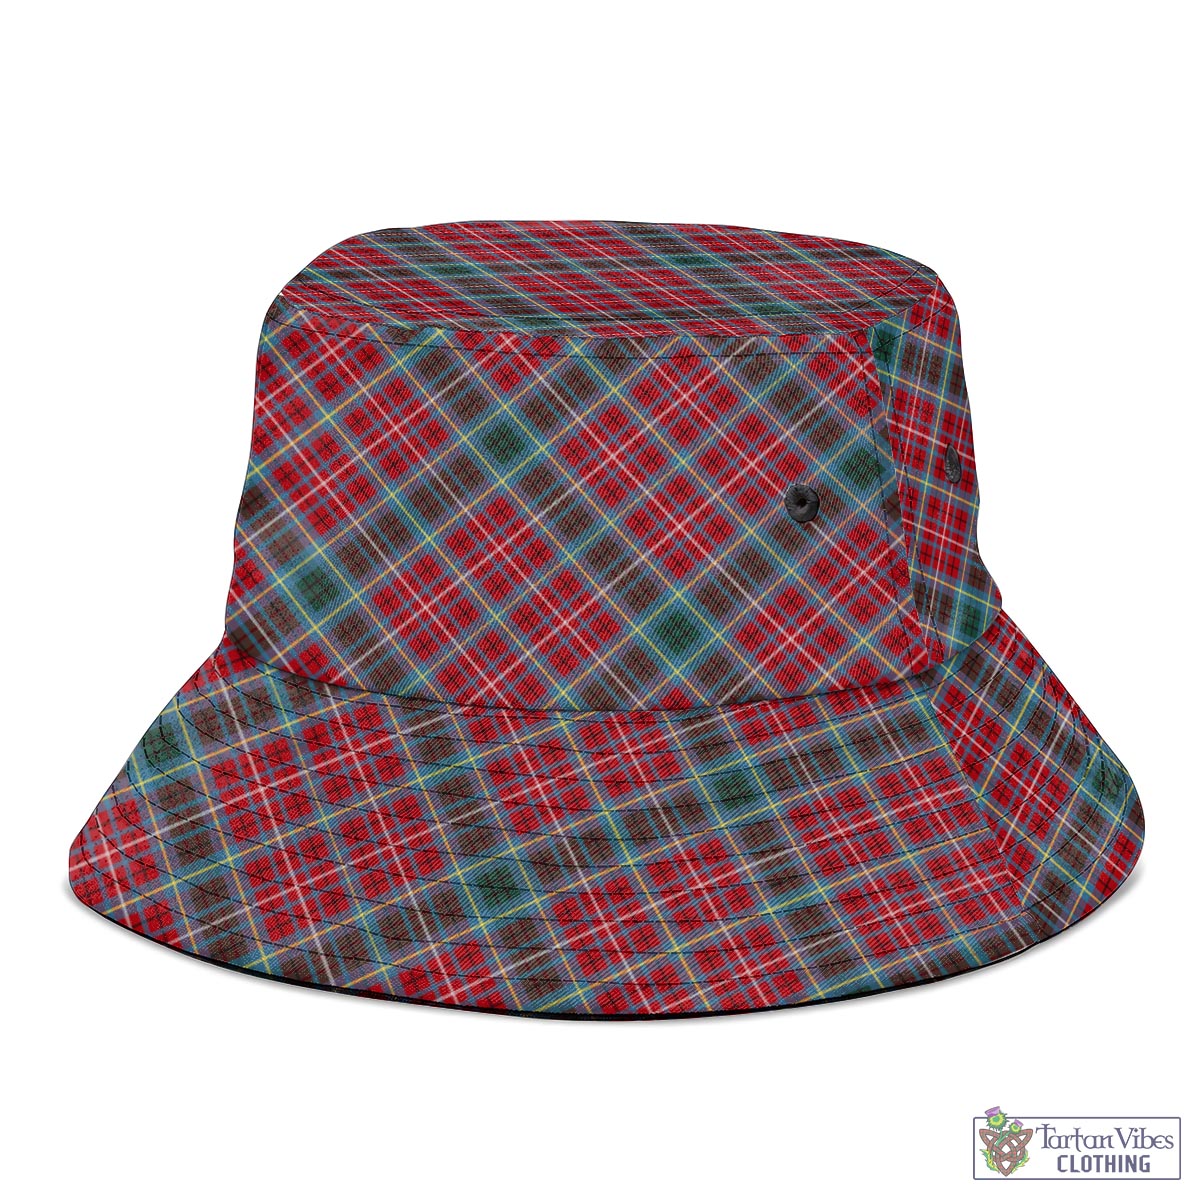 Tartan Vibes Clothing British Columbia Province Canada Tartan Bucket Hat